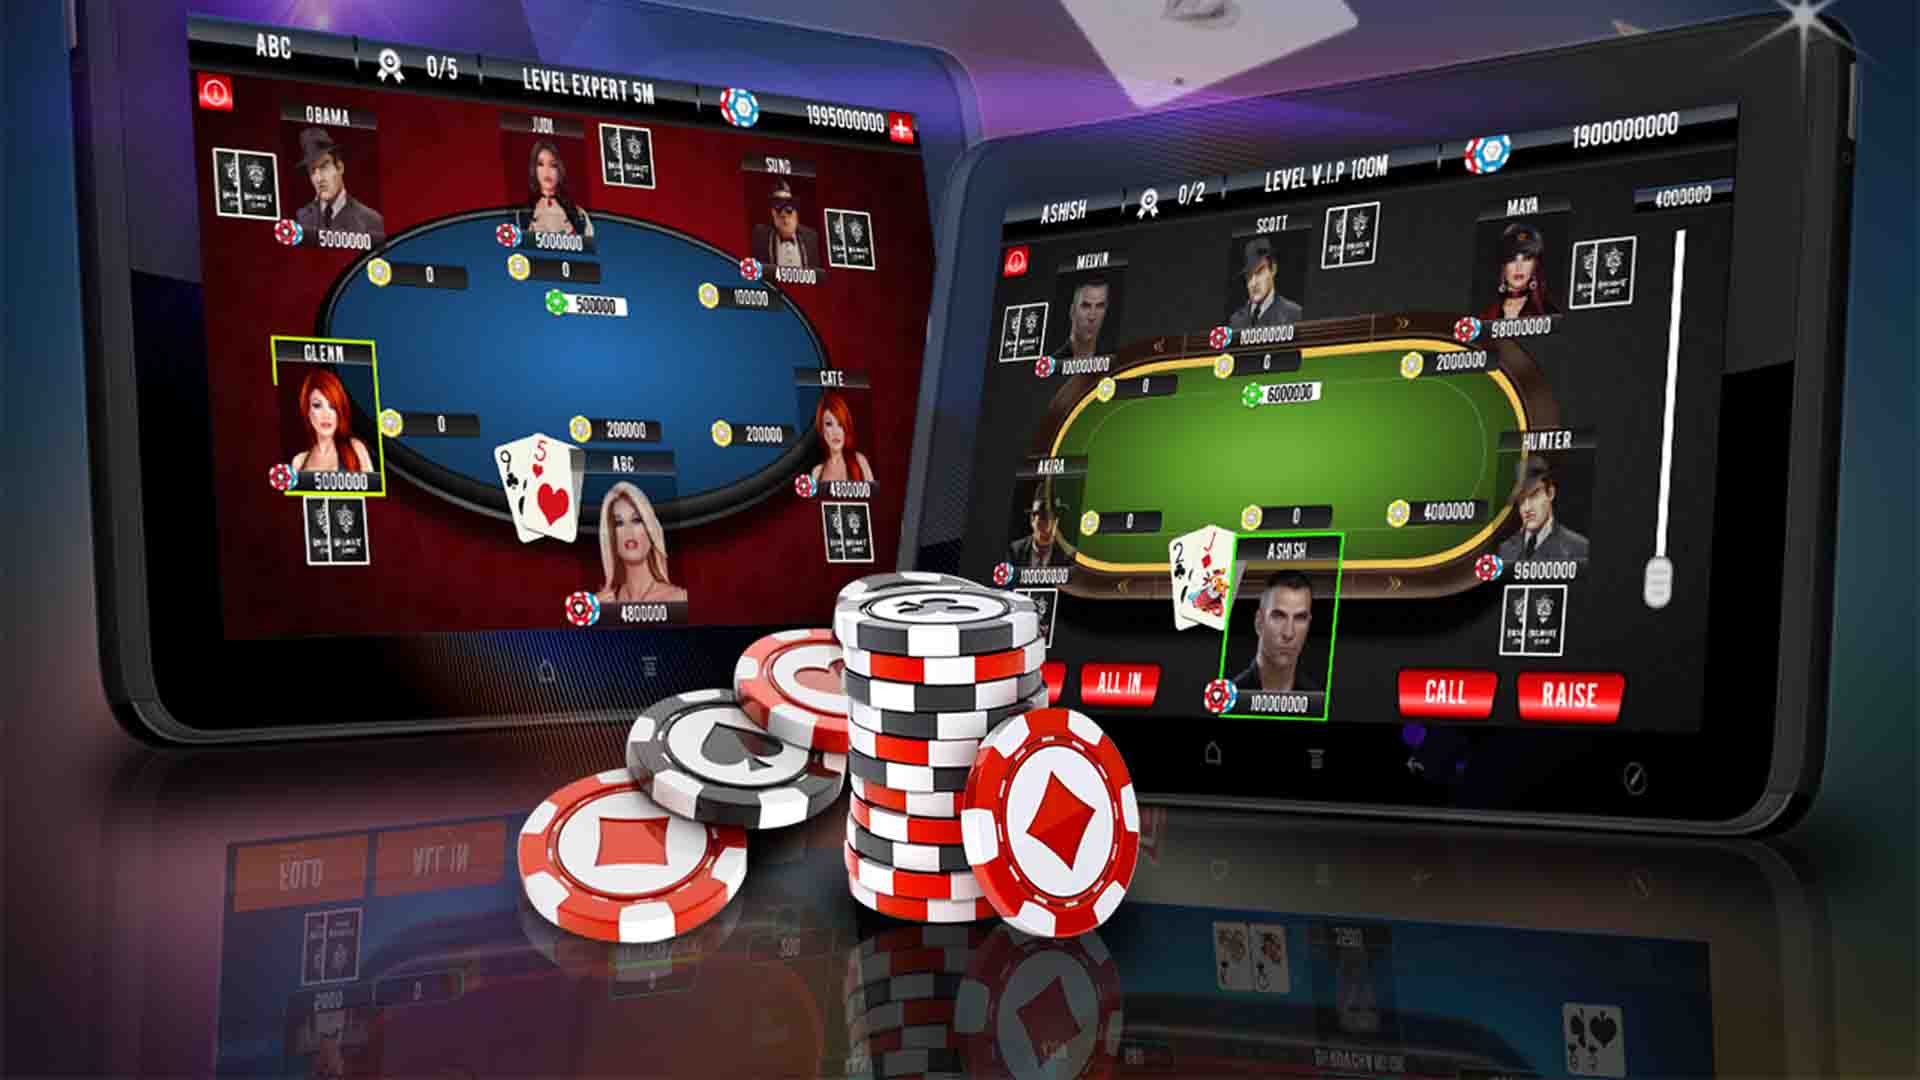 Jocuri demo de cazino online – avantaje și funcționalitate dintr-o privire